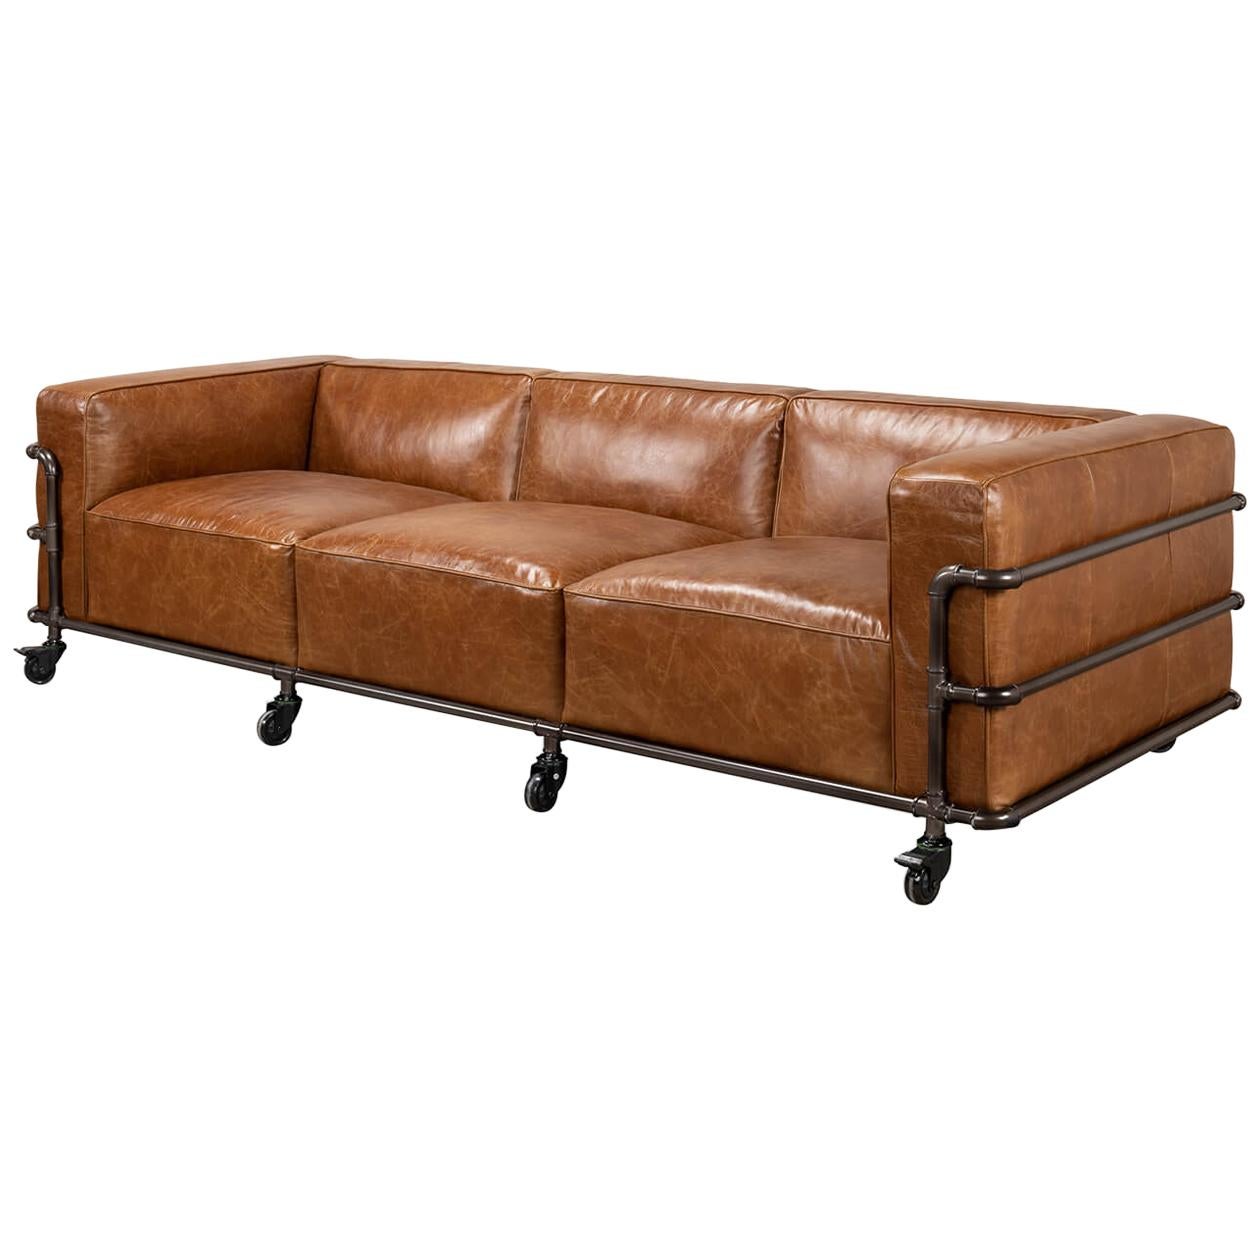 British Industrial Leather Sofa